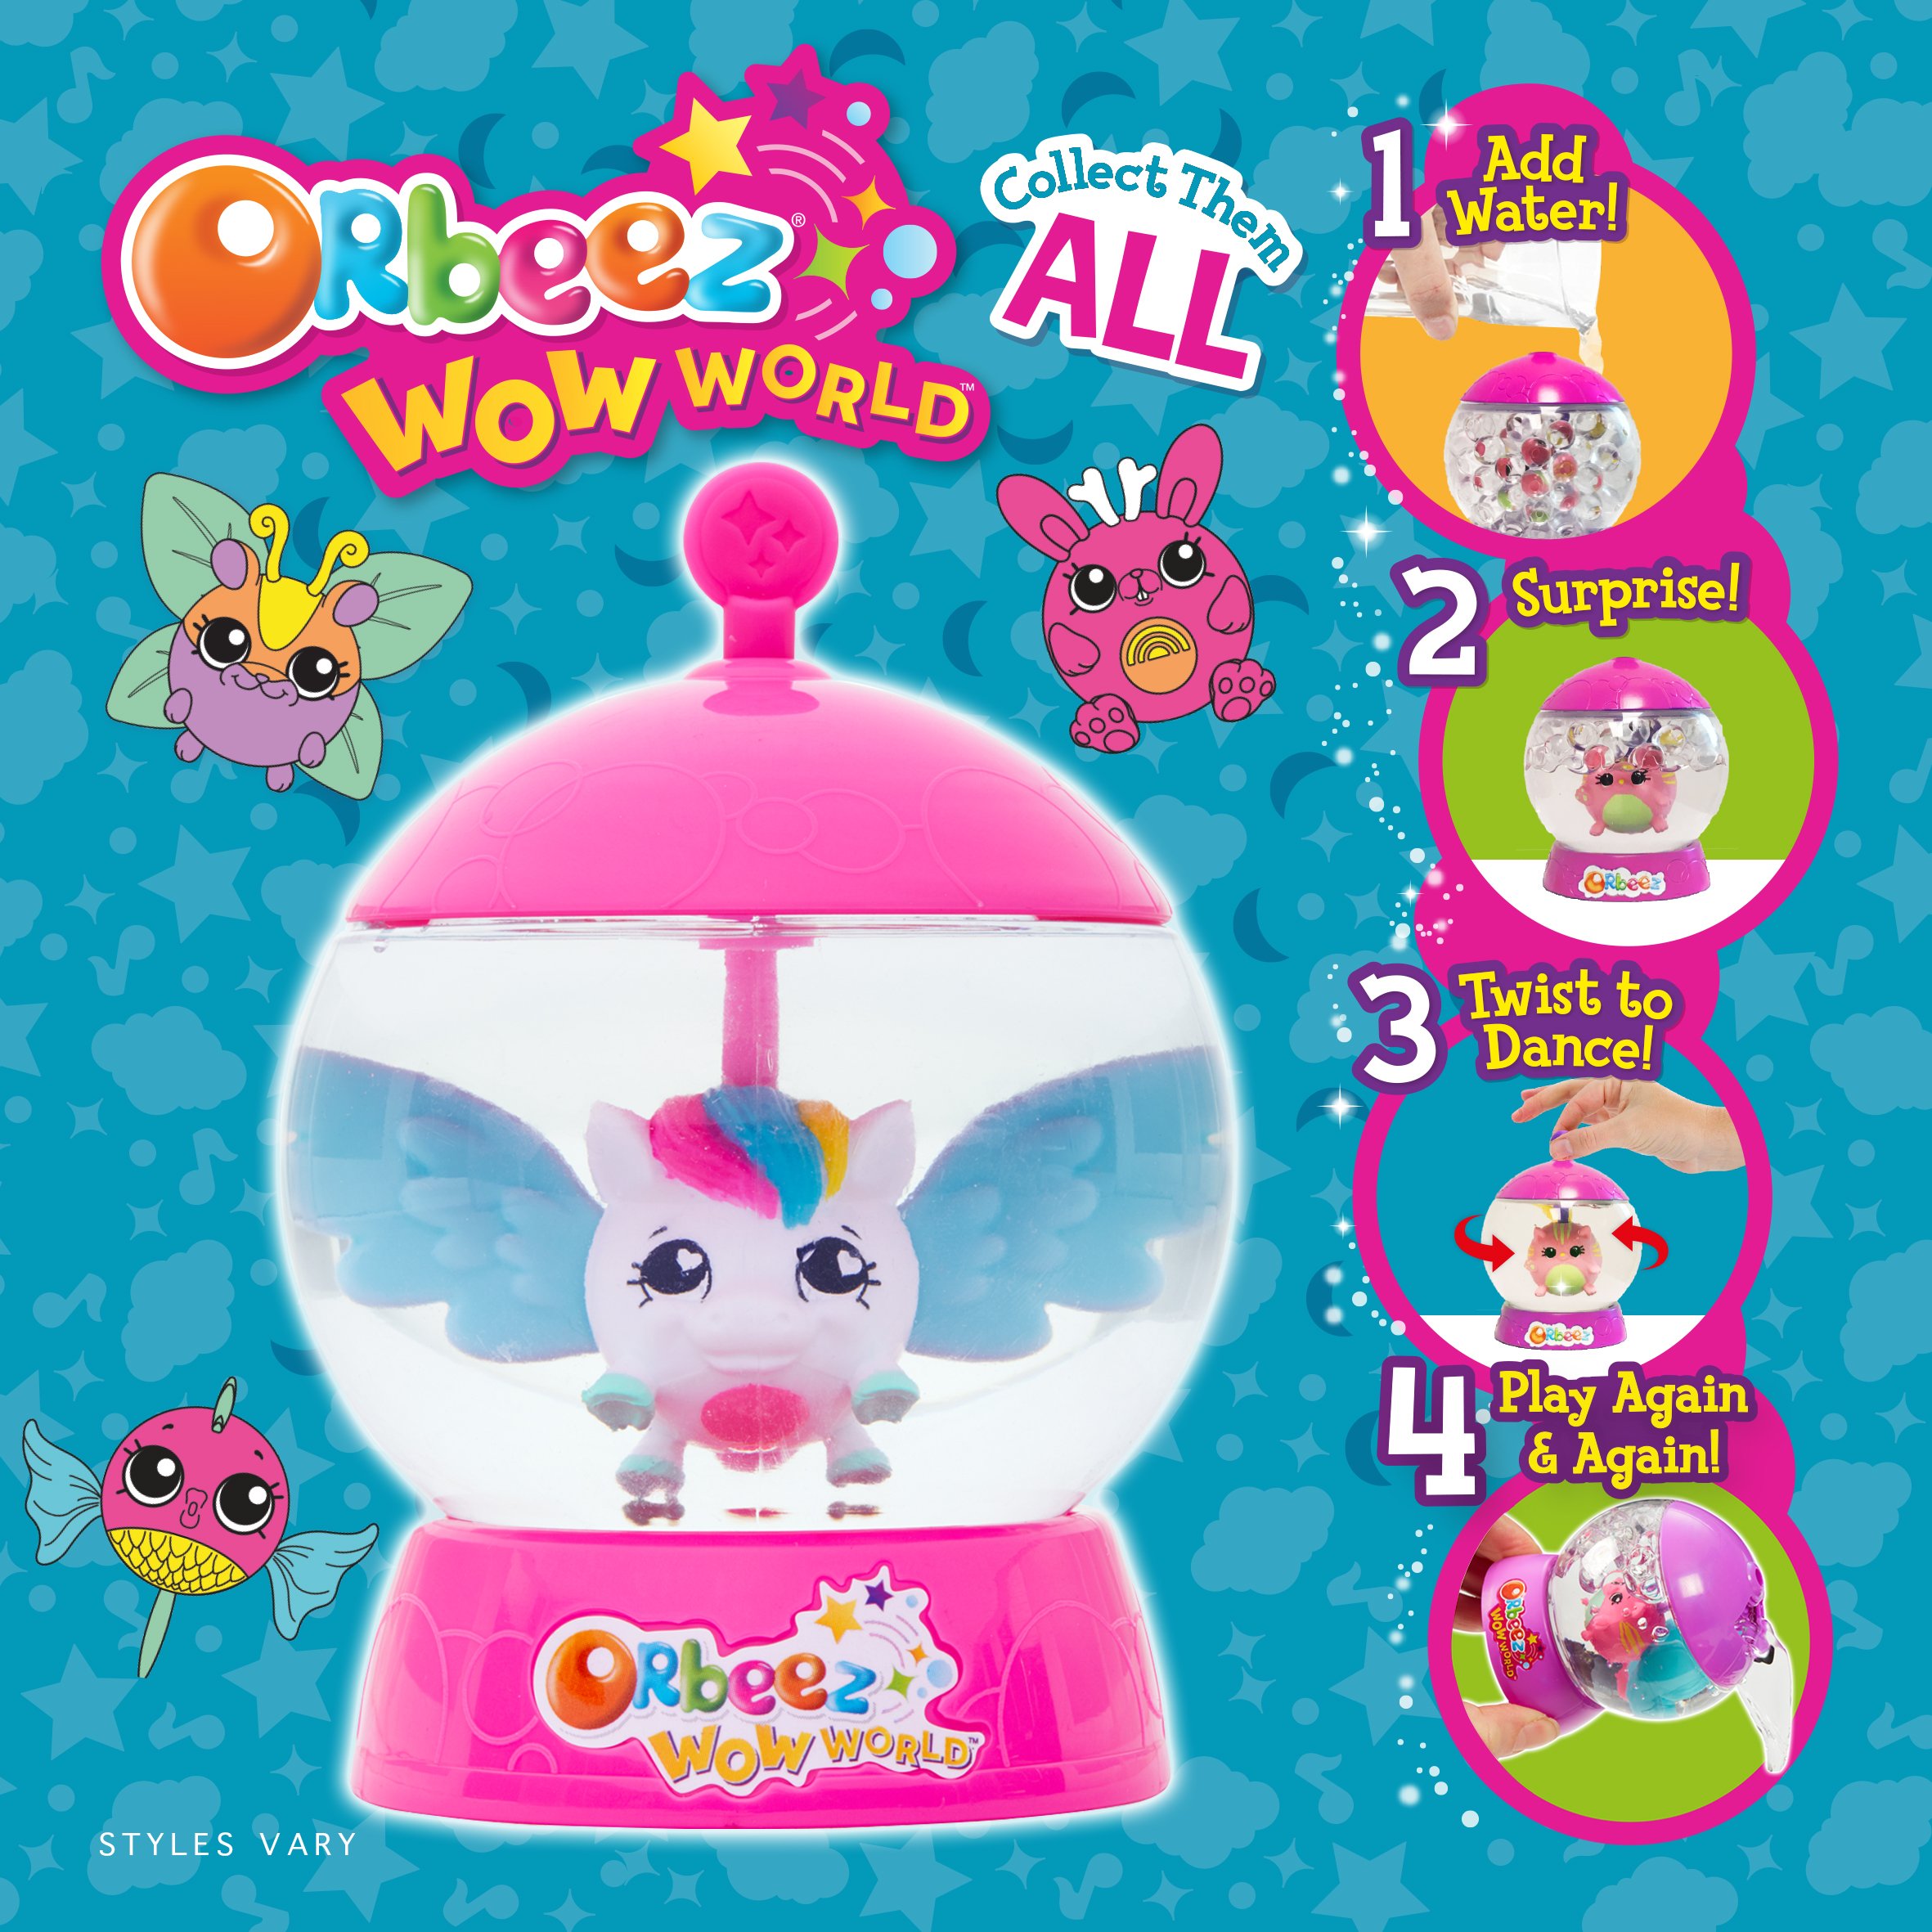 Orbeez - Wowzer Surprise Toy